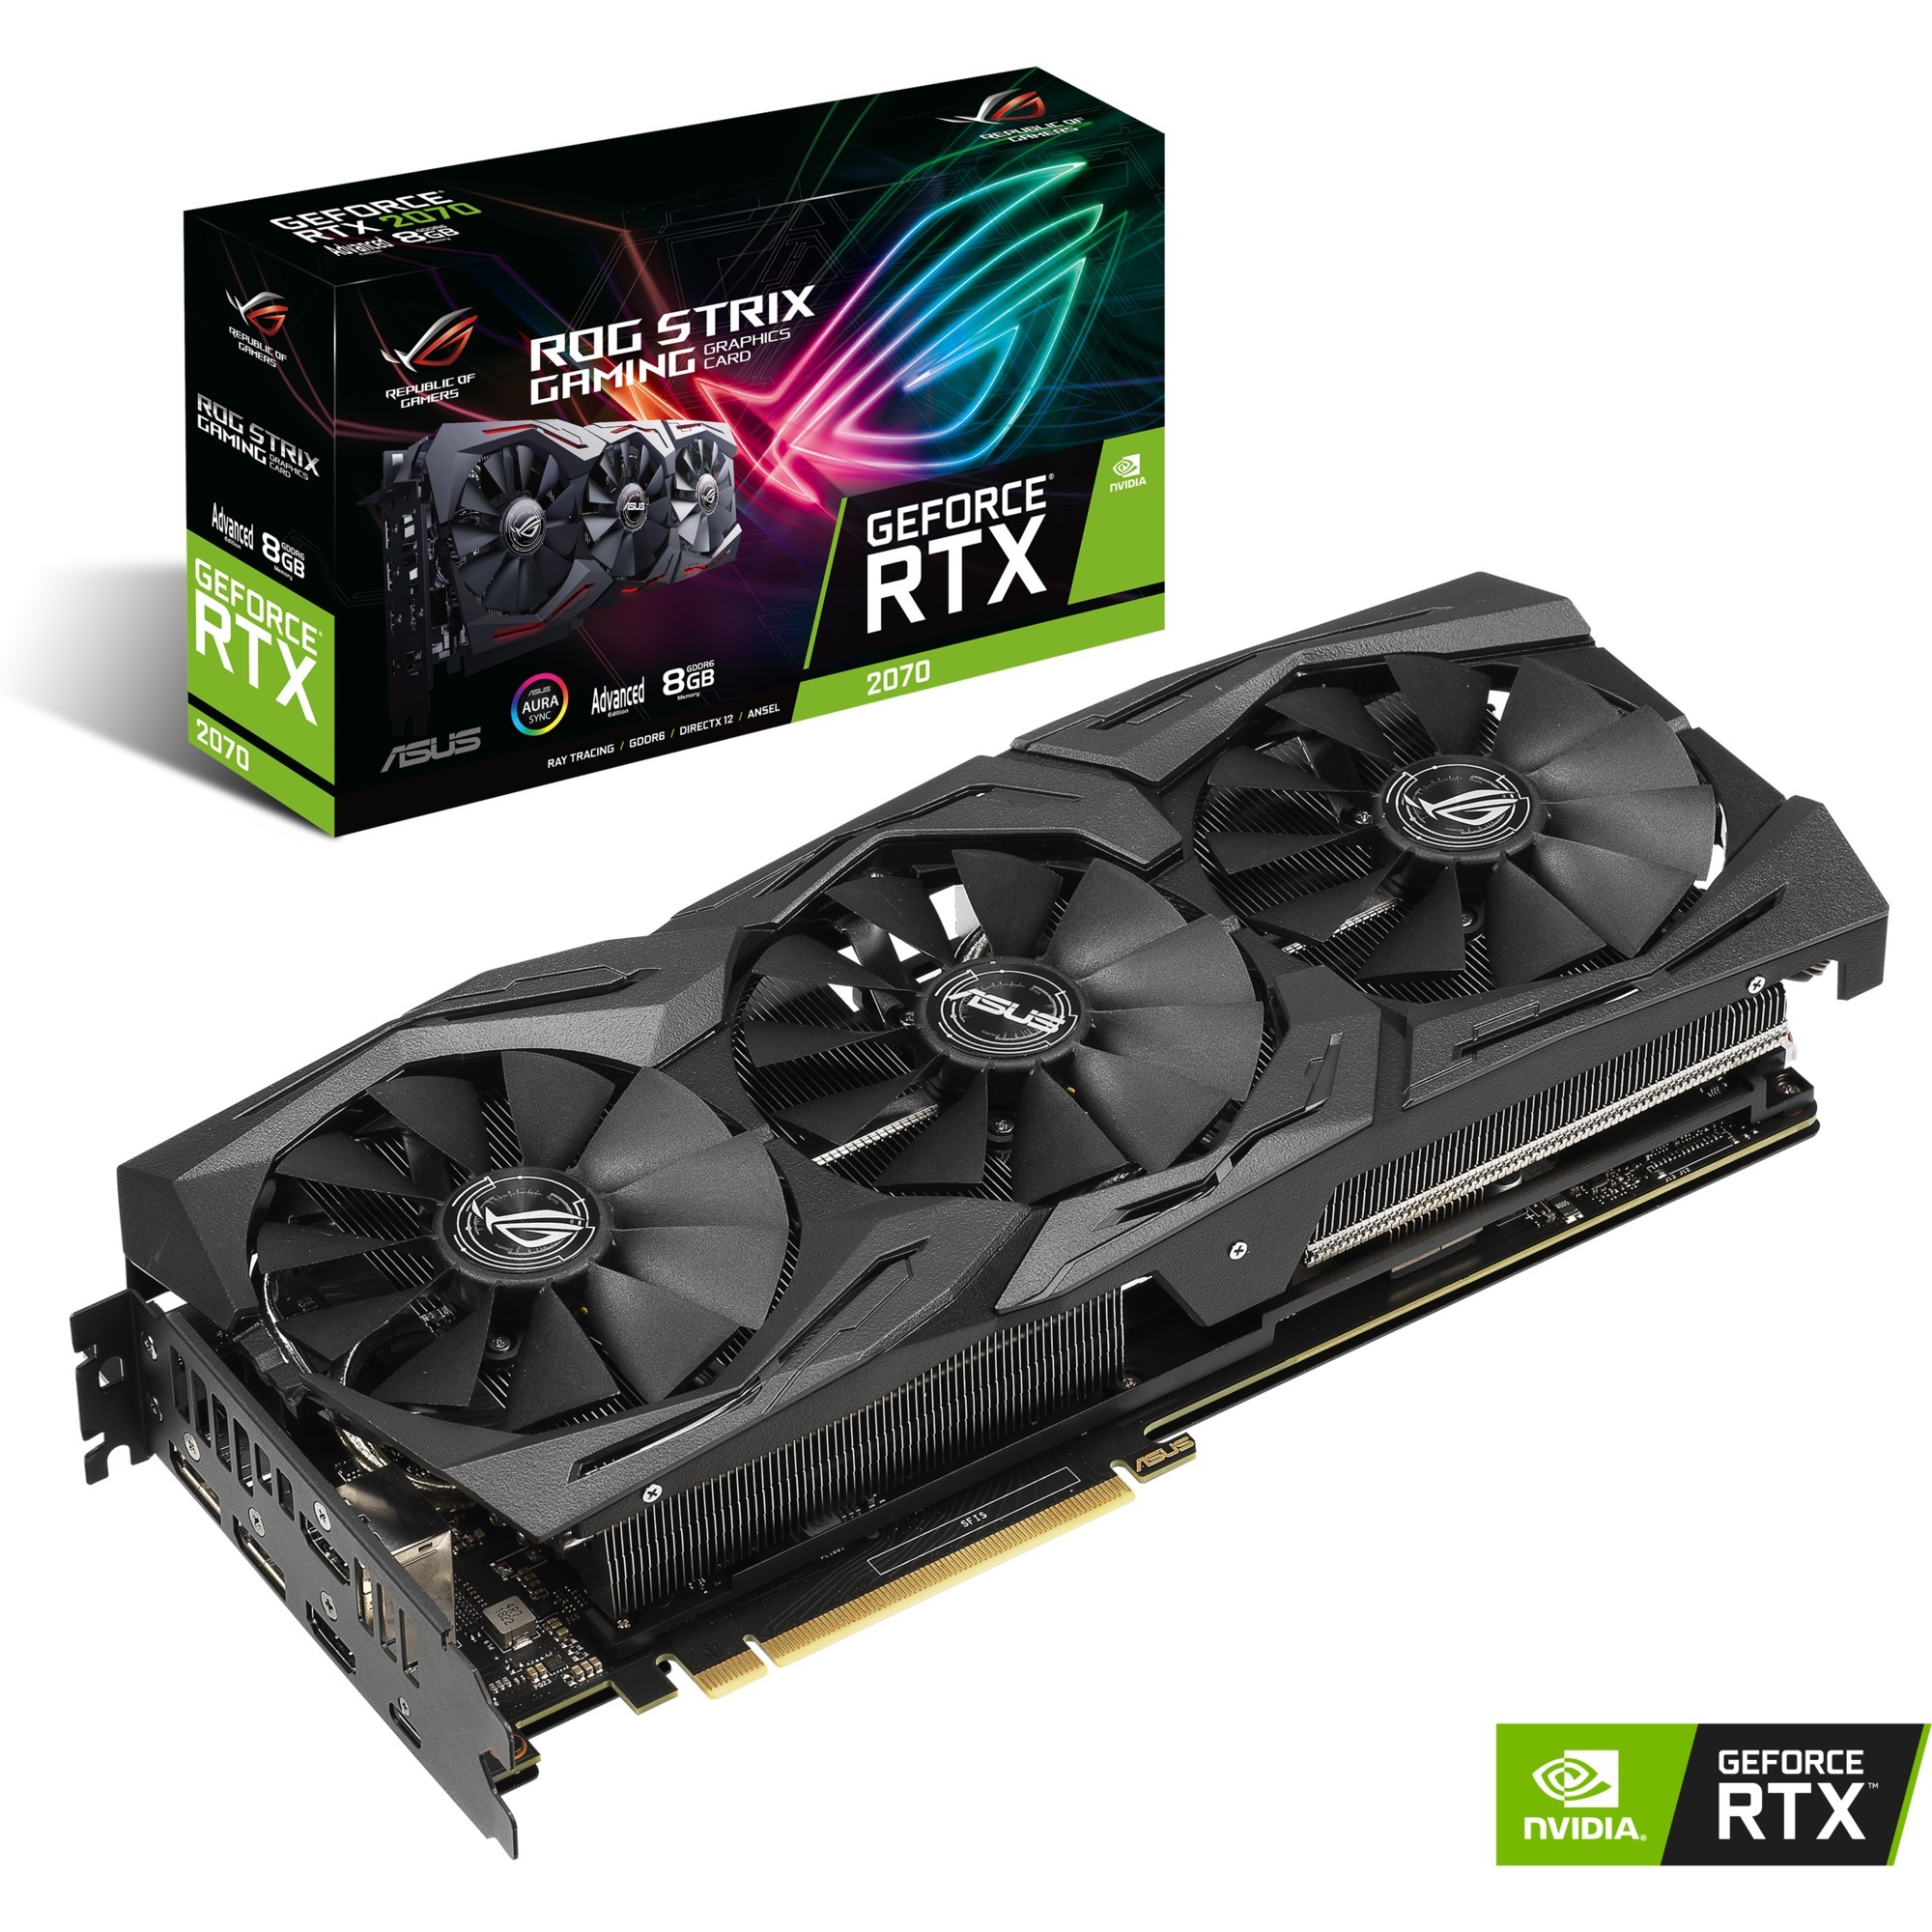 ROG-STRIX-RTX2070-A8G-GAMING GeForce RTX 2070 8 GB GDDR6, Karta graficzna